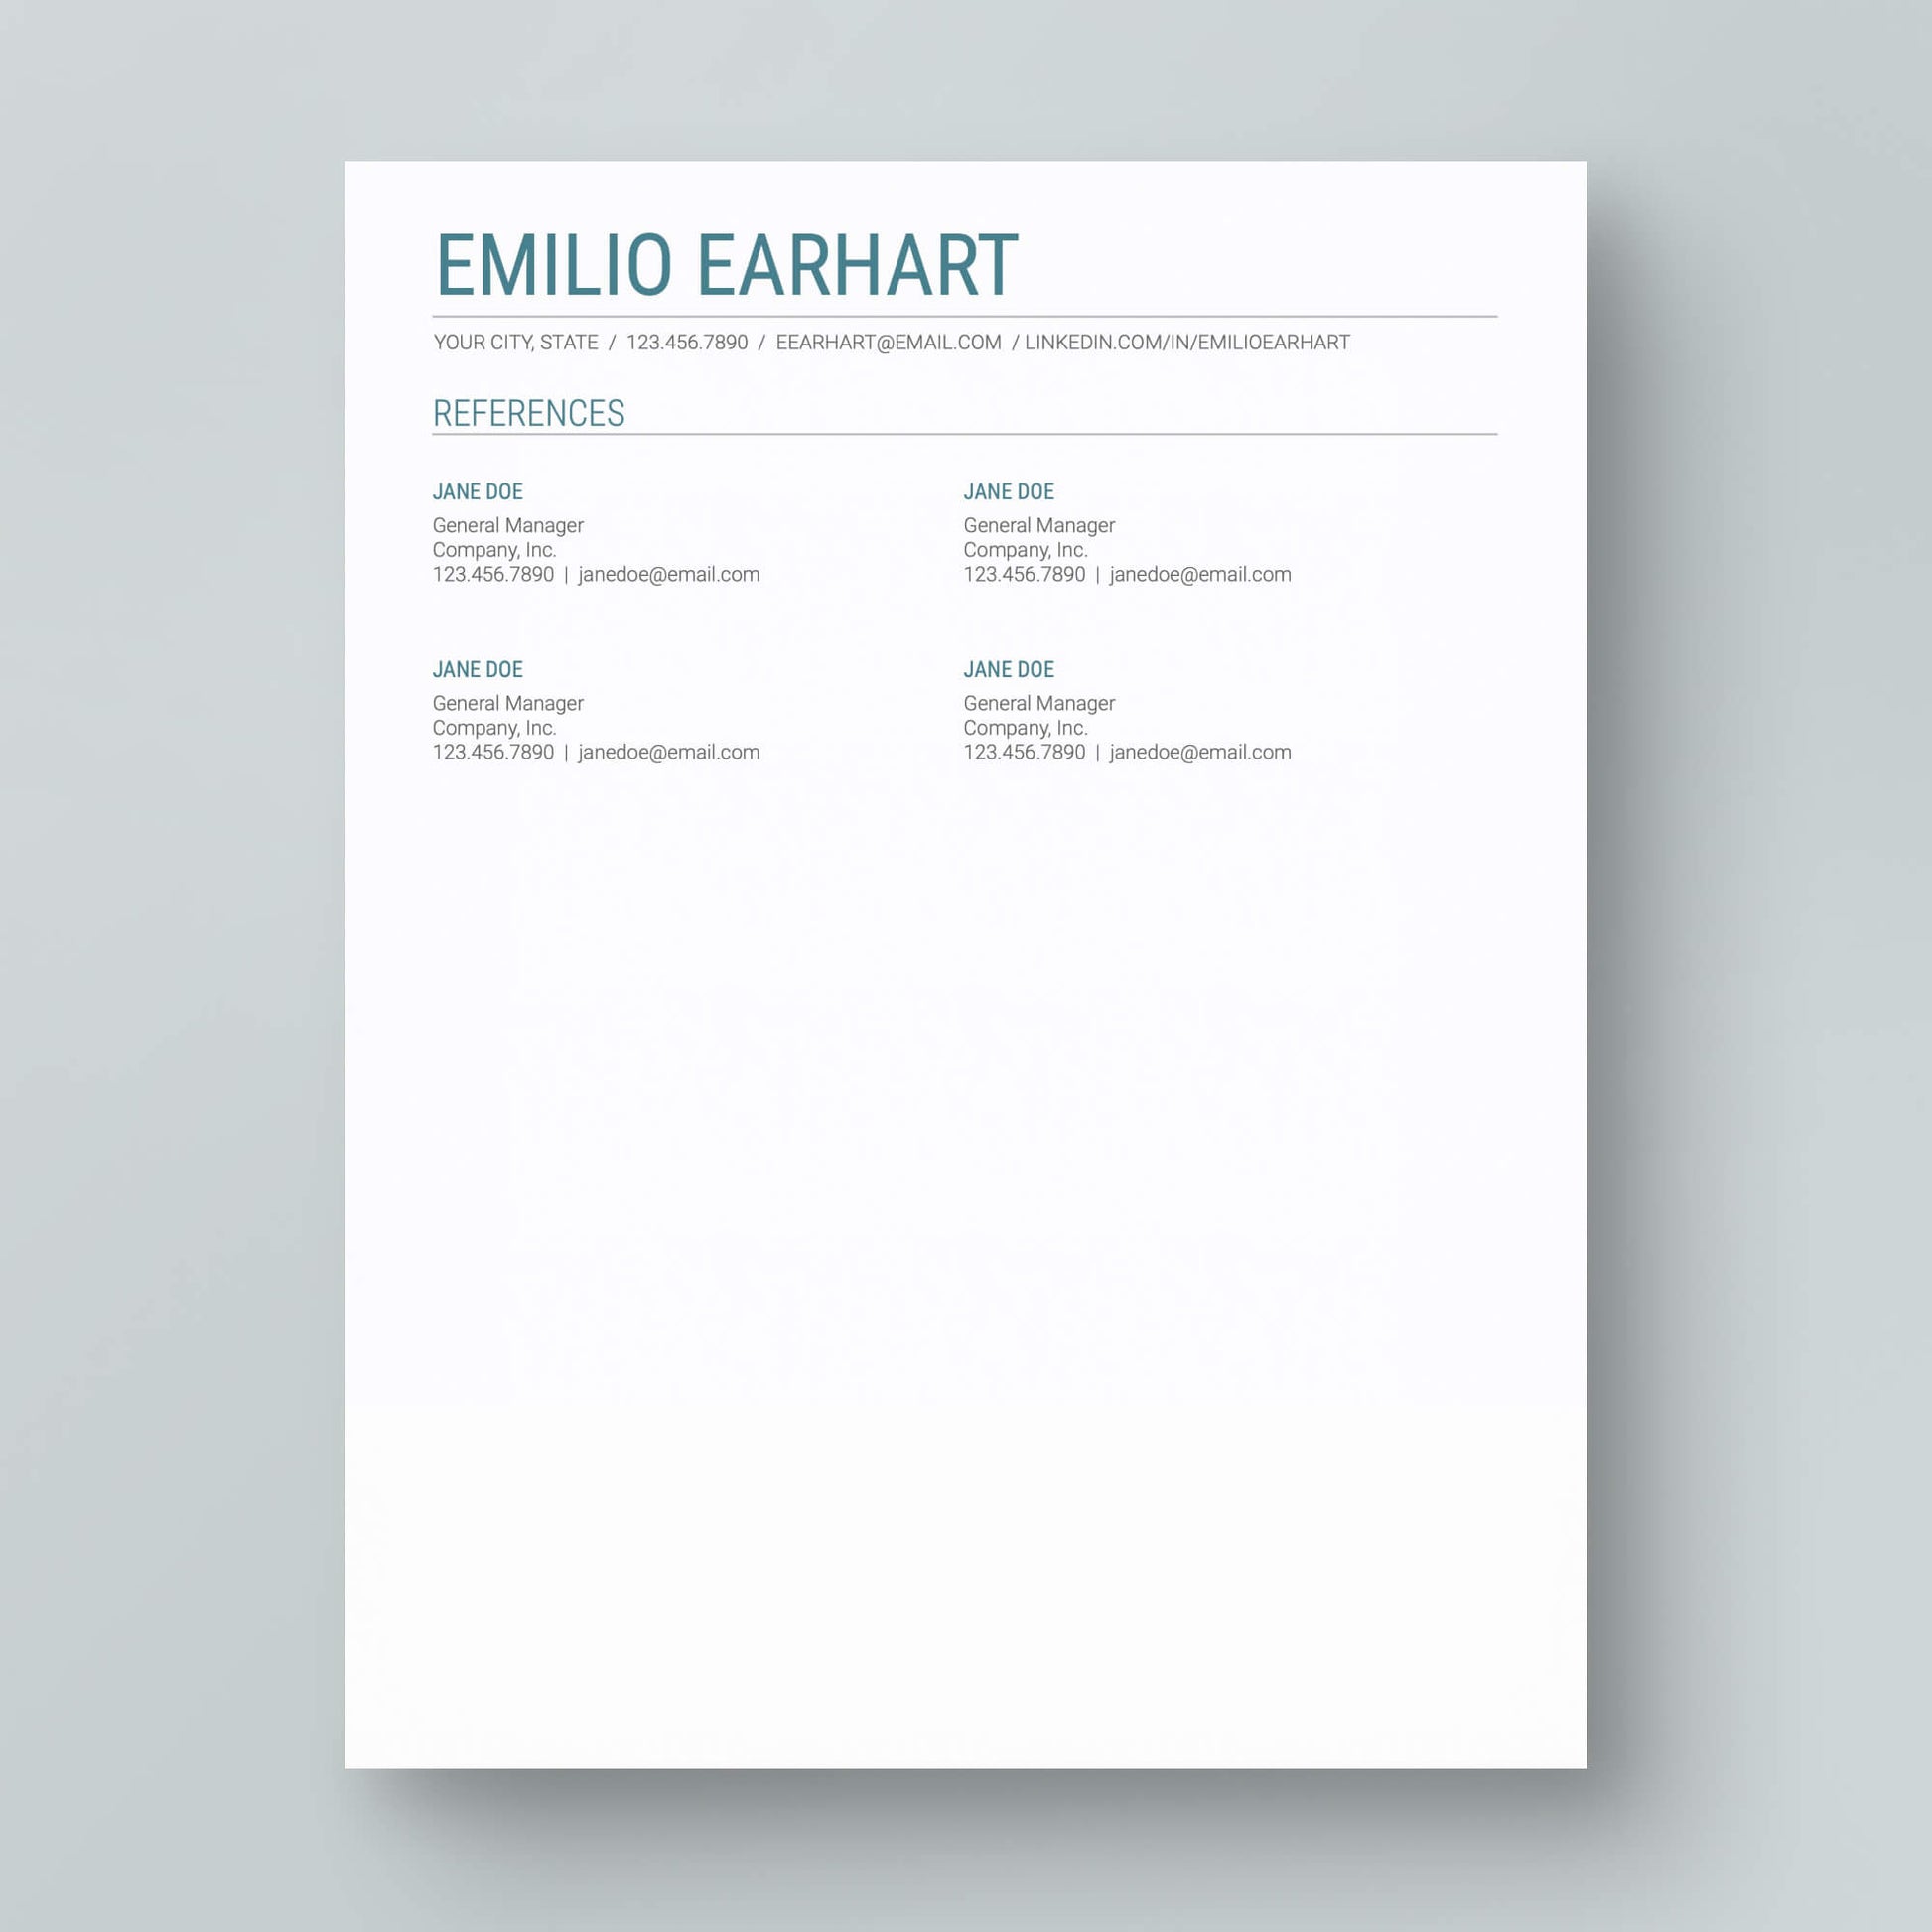 Resume Template: Emilio Earhart - MioDocs